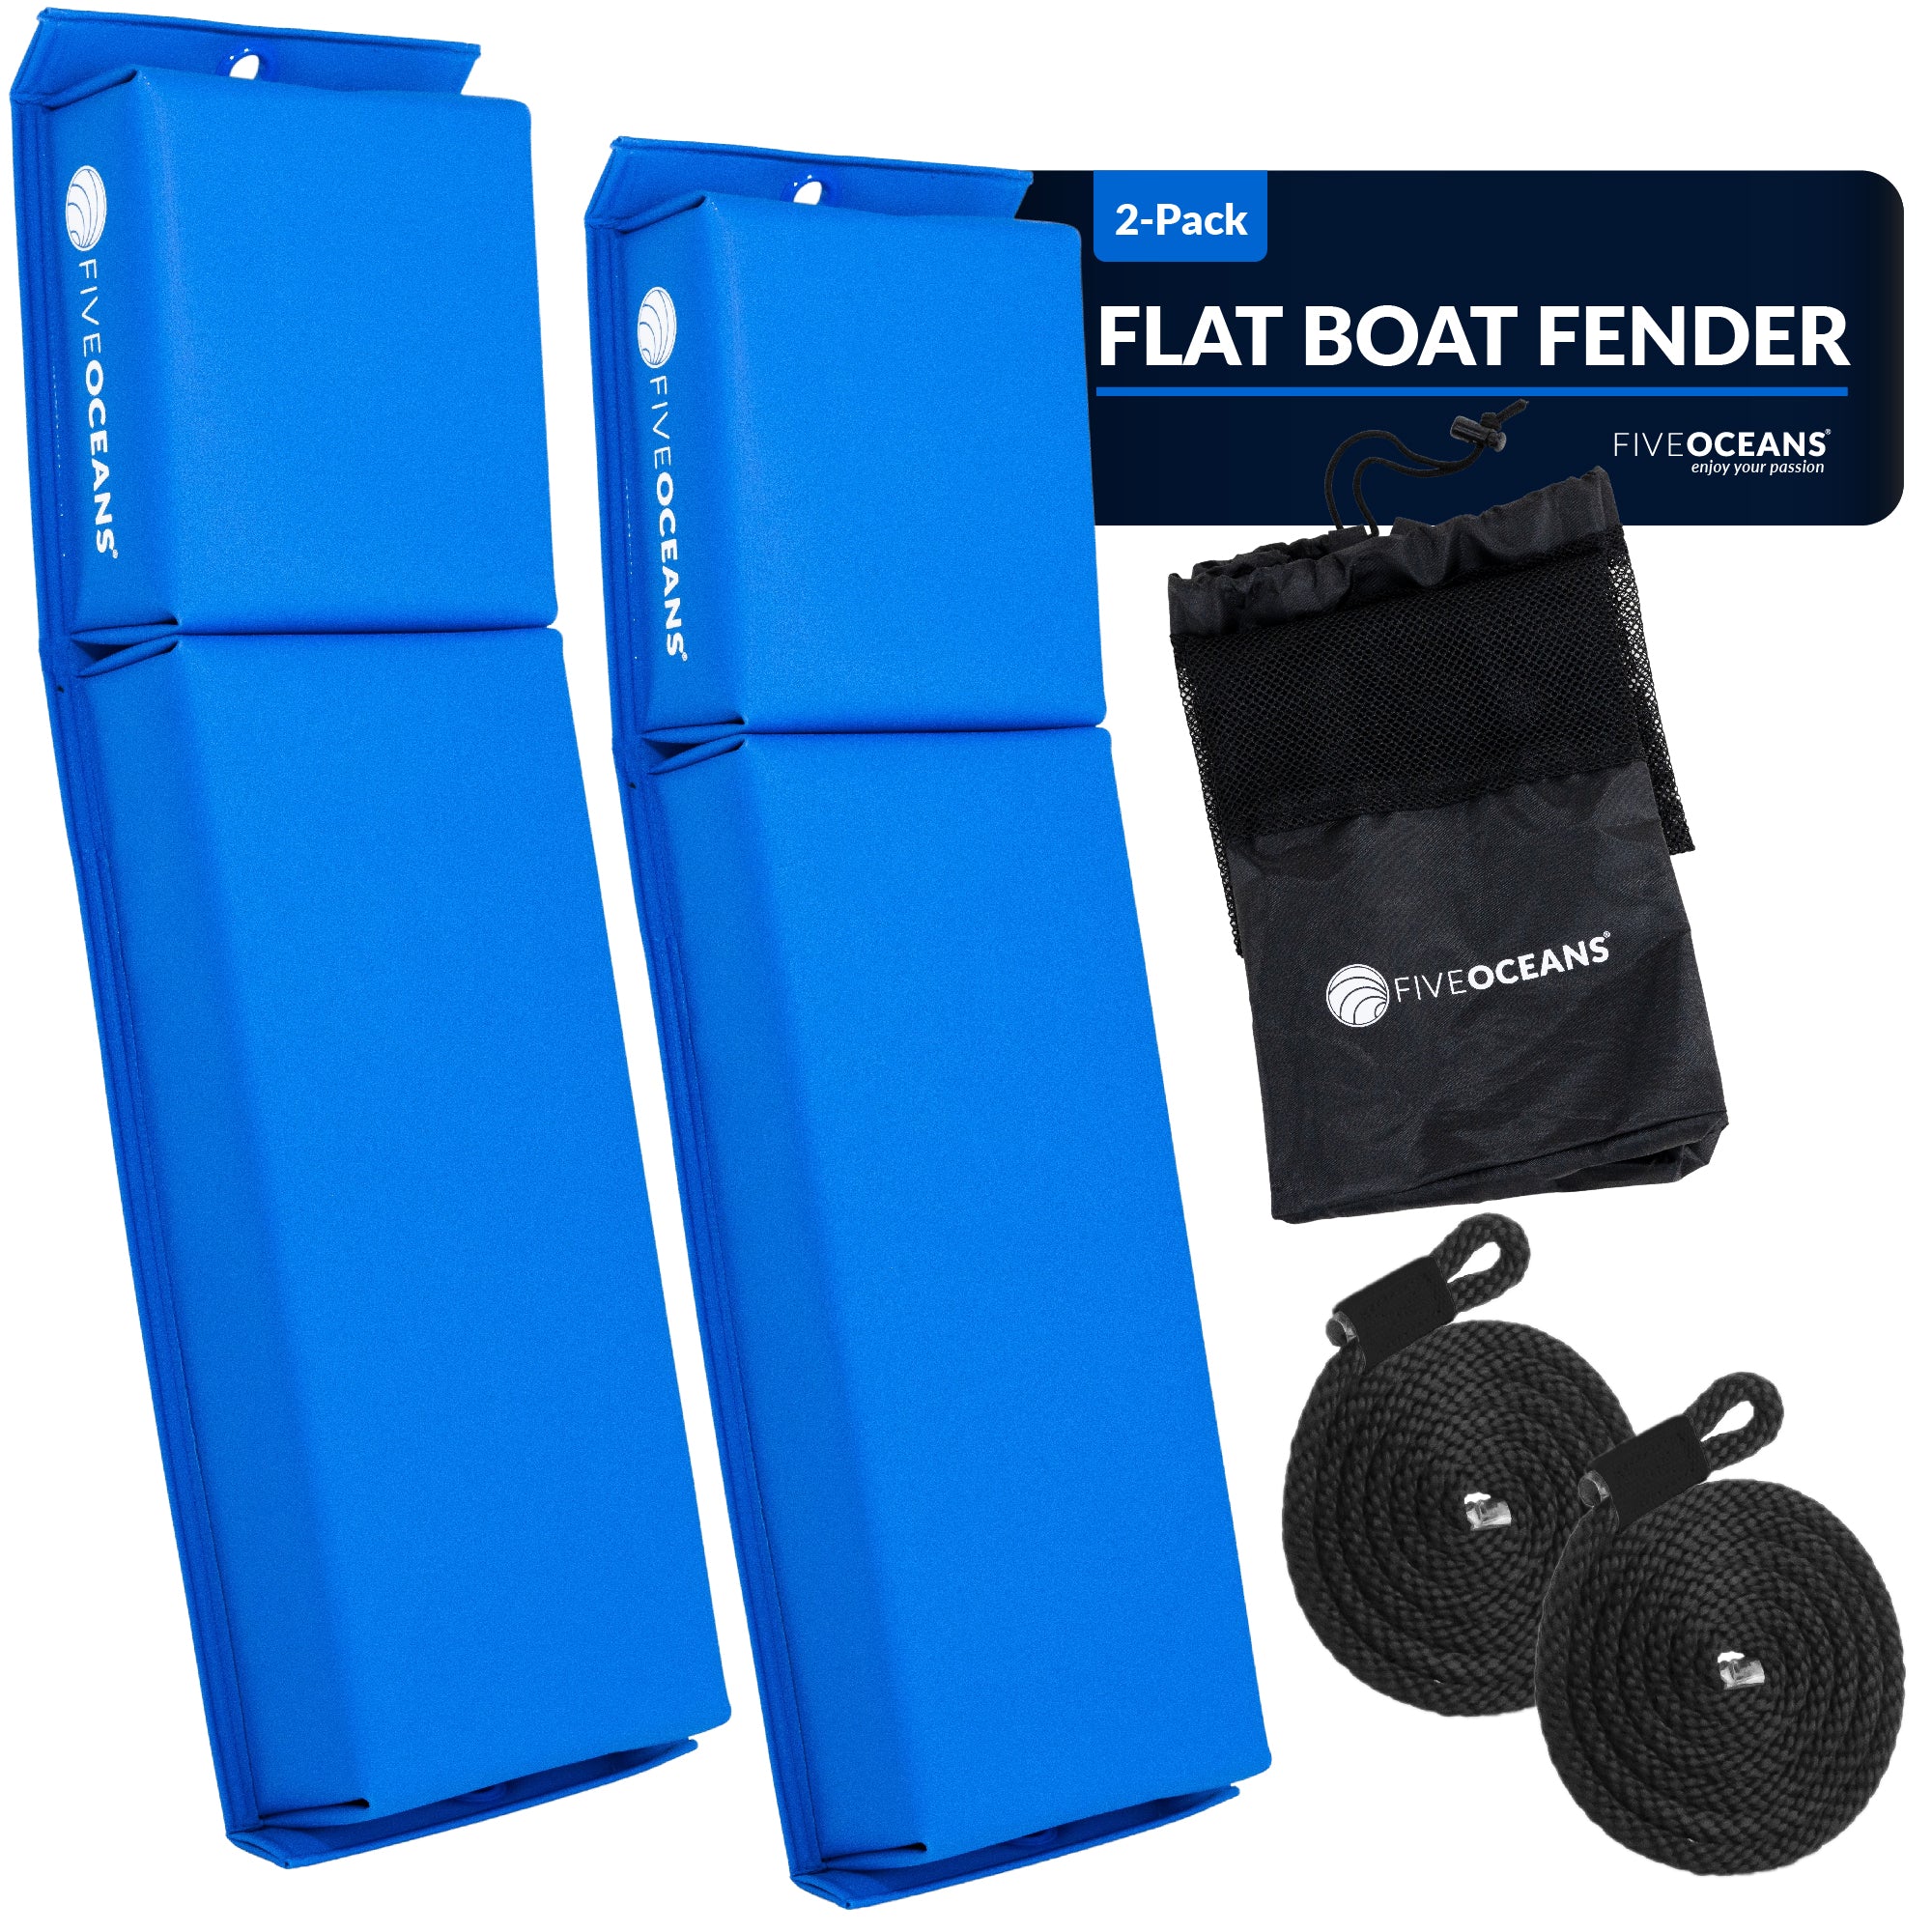 Boat Contour Fender 23-1/2" x 6-7/8" x 2-1/2", Blue, 2-Pack - FO4613